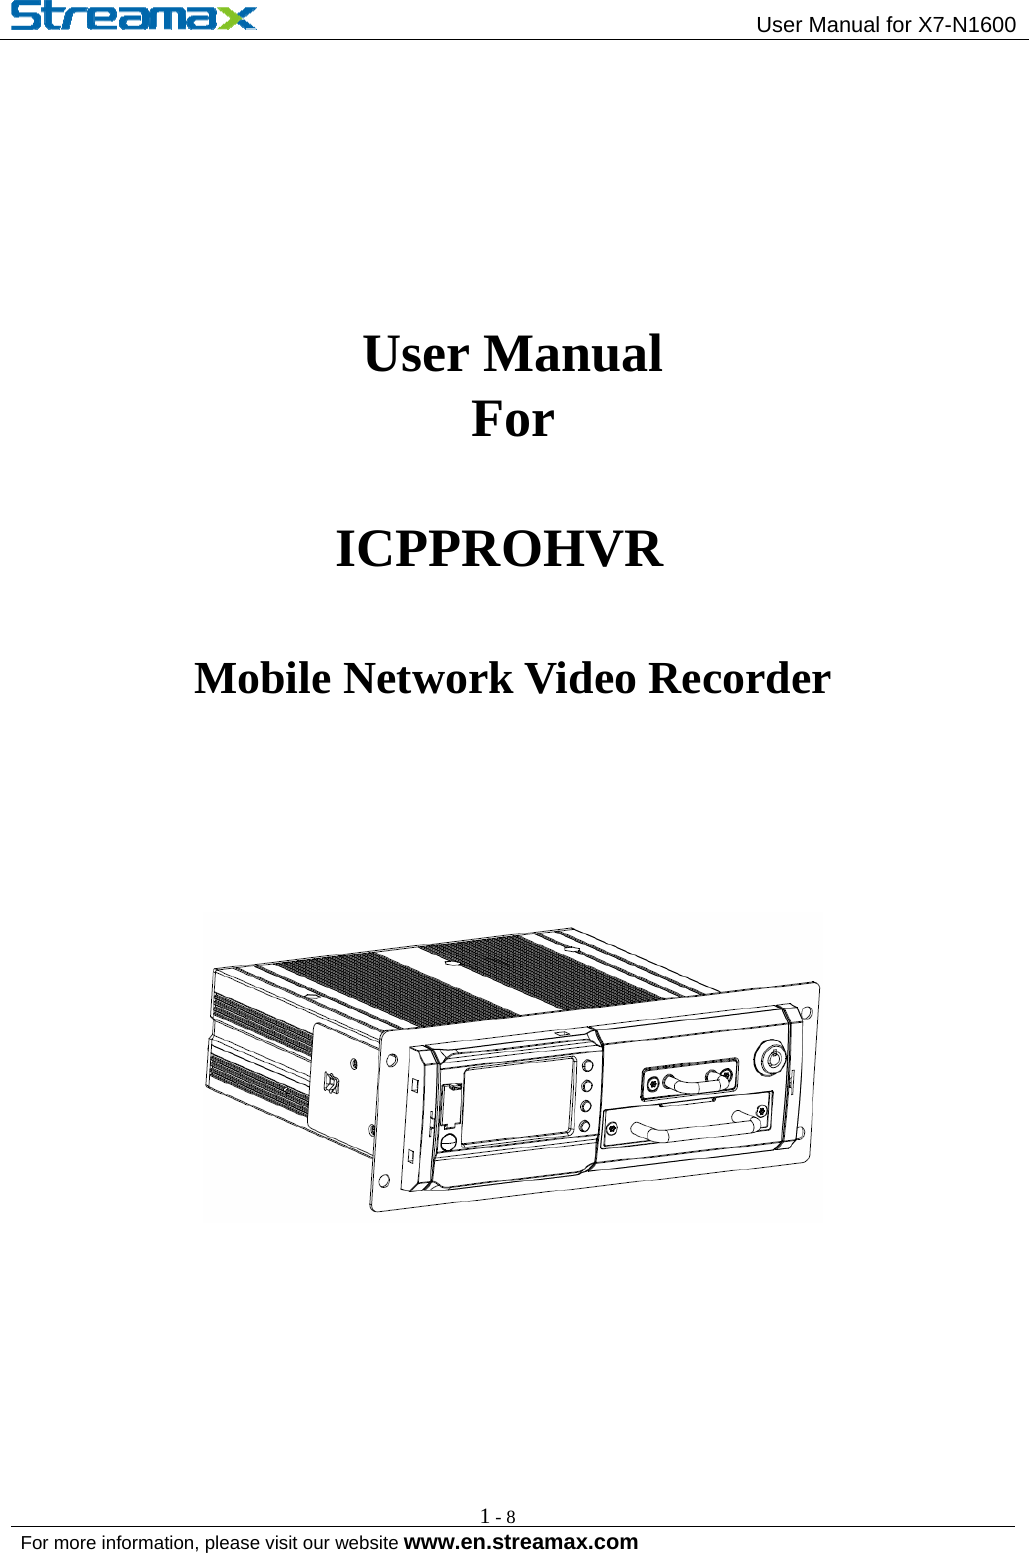                                                 User Manual for X7-N1600                                                                                                          For more information, please visit our website www.en.streamax.com  1-8    User Manual For  ICPPROHVR Mobile Network Video Recorder        